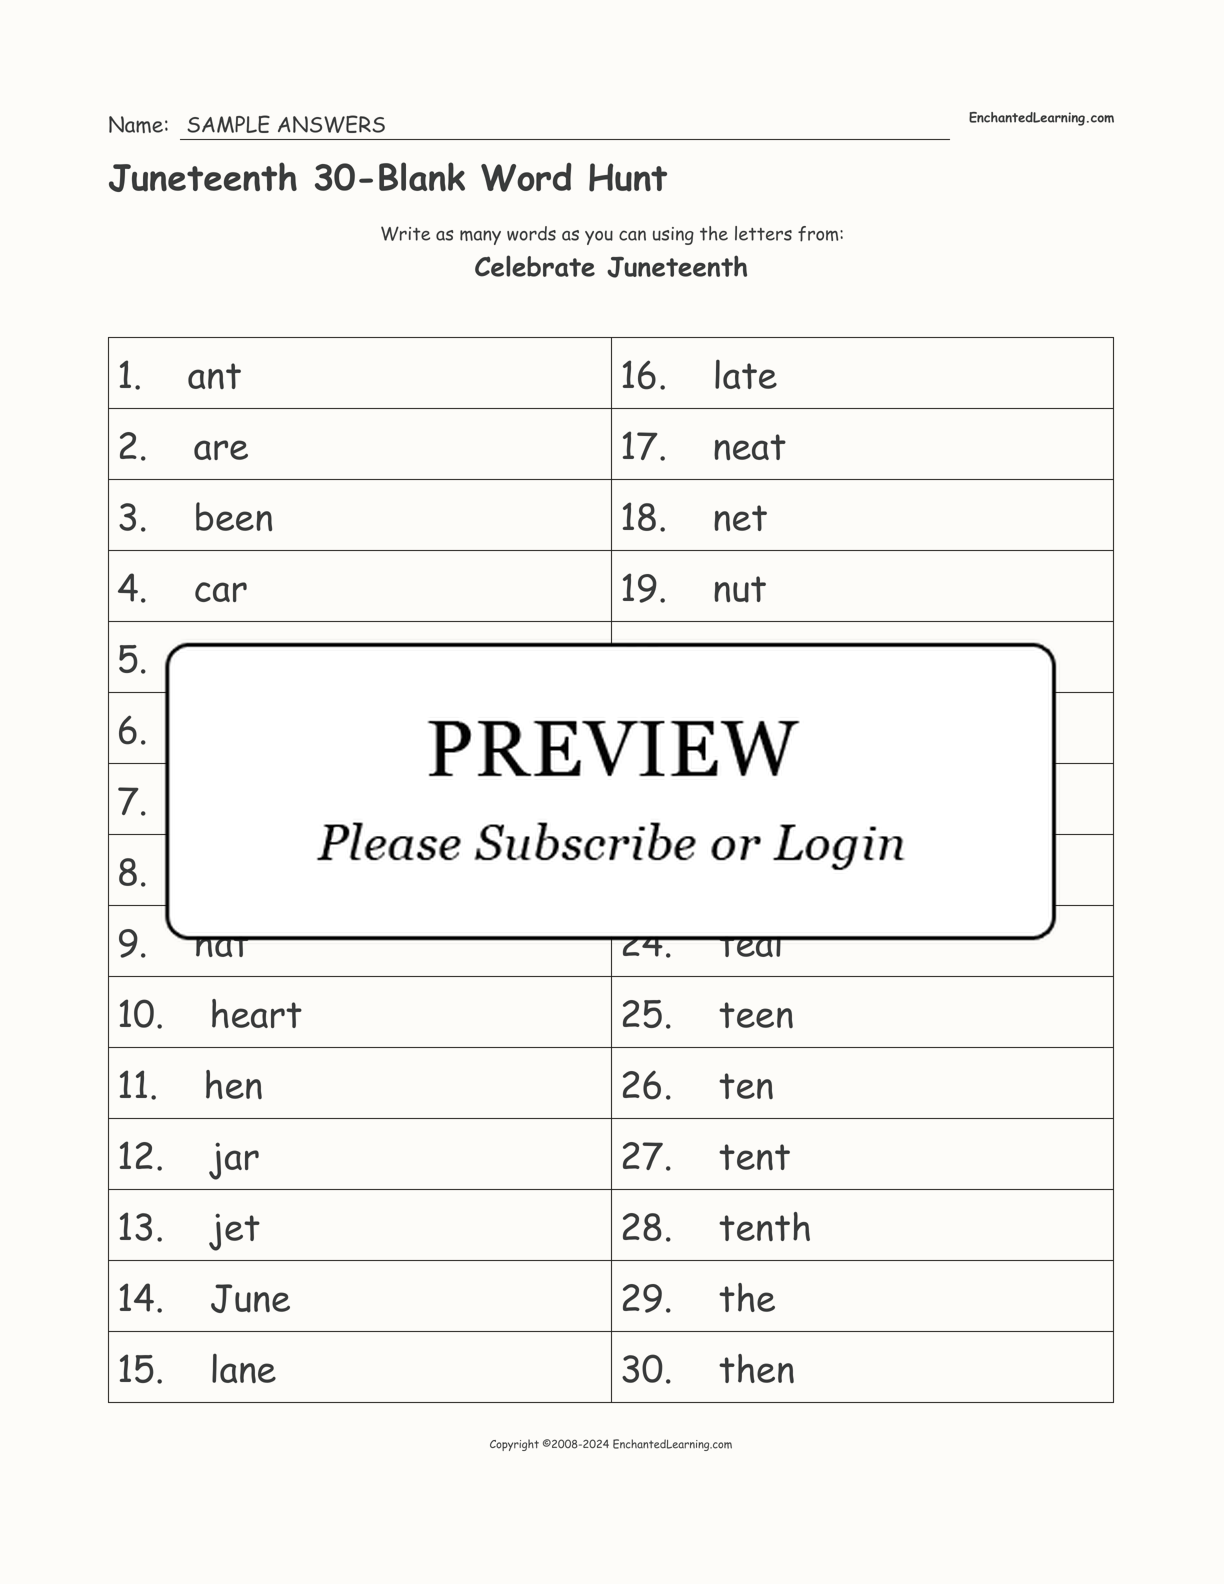 Juneteenth 30-Blank Word Hunt interactive worksheet page 2